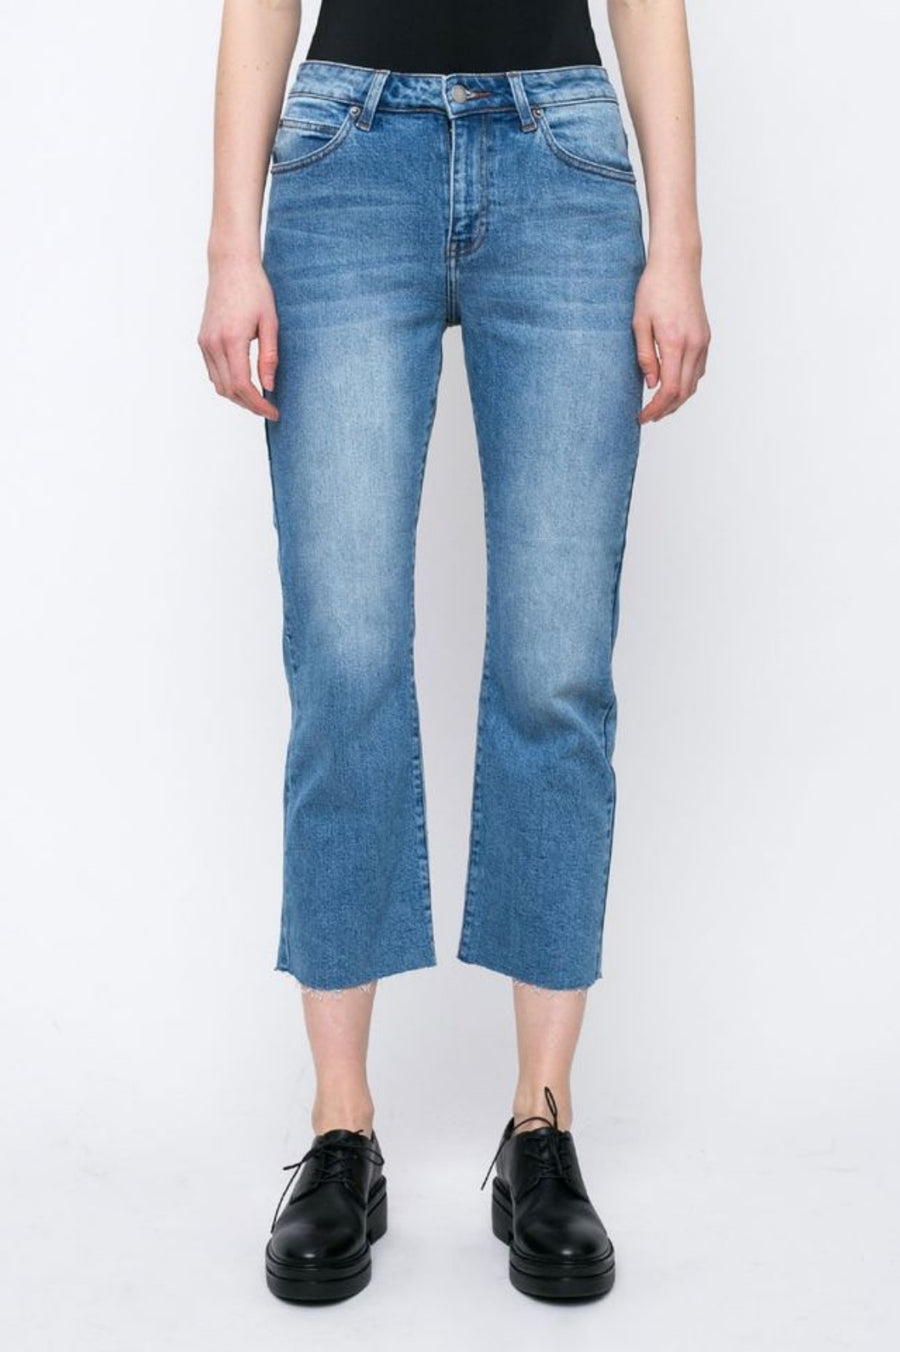 Meadow Jeans - Shaded Mid Blue - Dr Denim Jeans - Australia & NZ